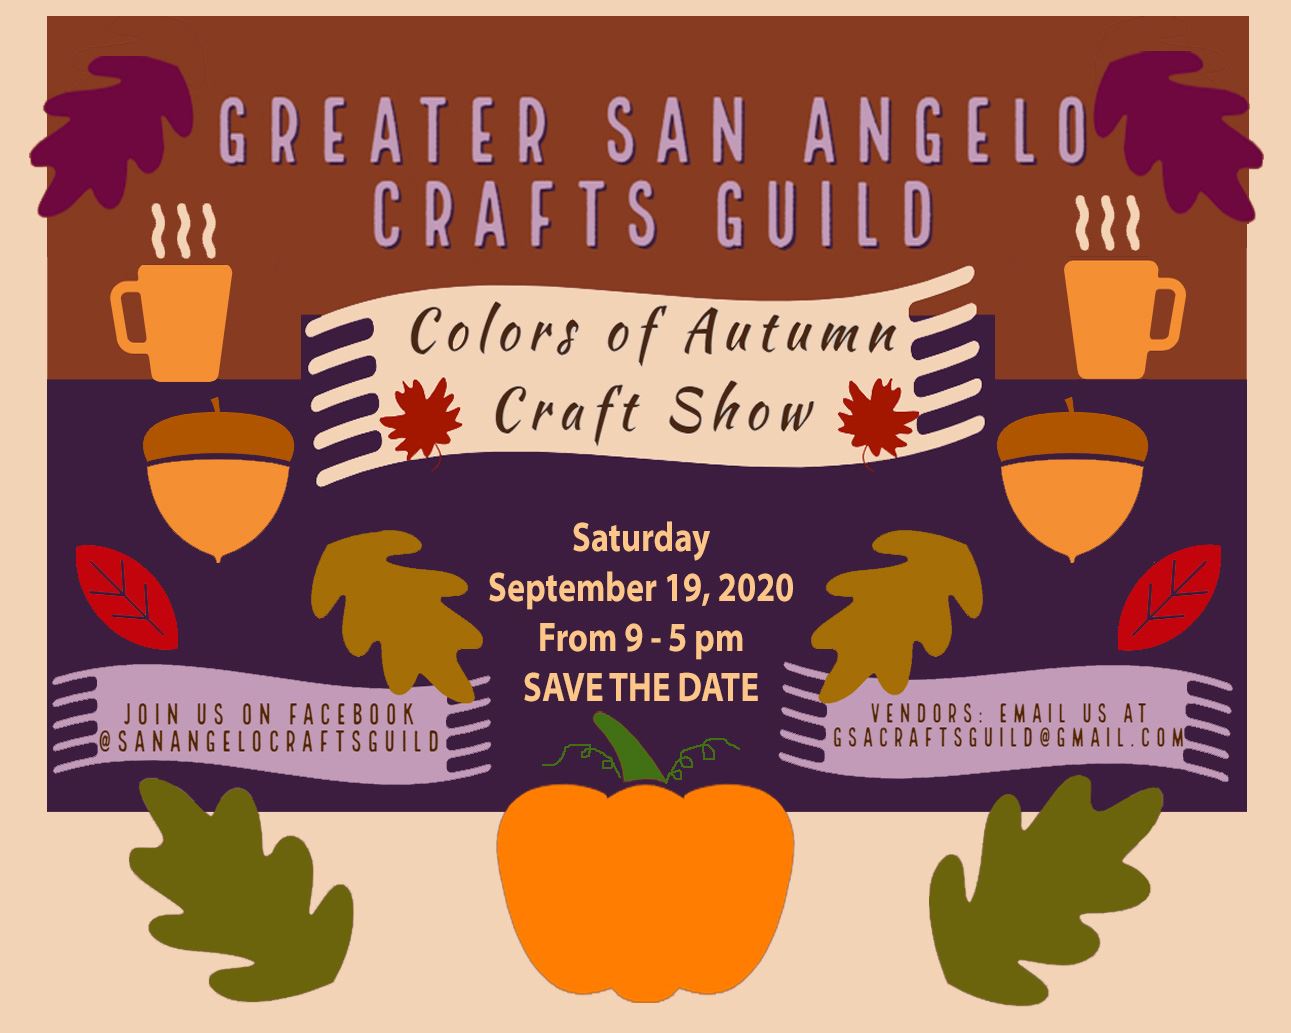 GSA Crafts Guild Colors of Autumn Craft Show